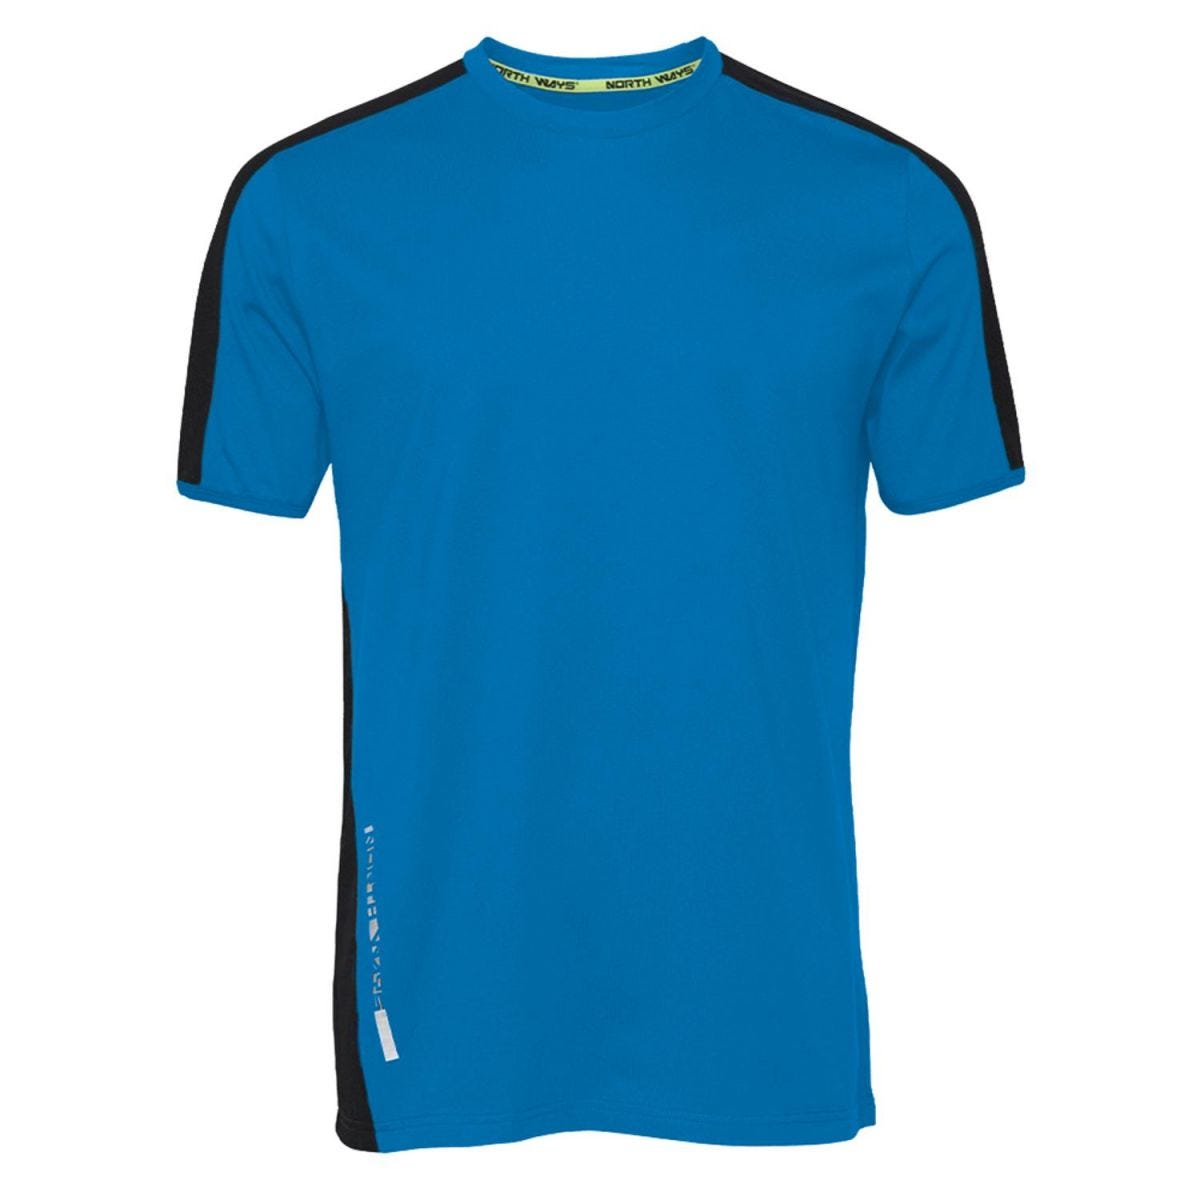 Tee-shirt à manches courtes pour homme Andy bleu - North Ways - Taille 4XL 0